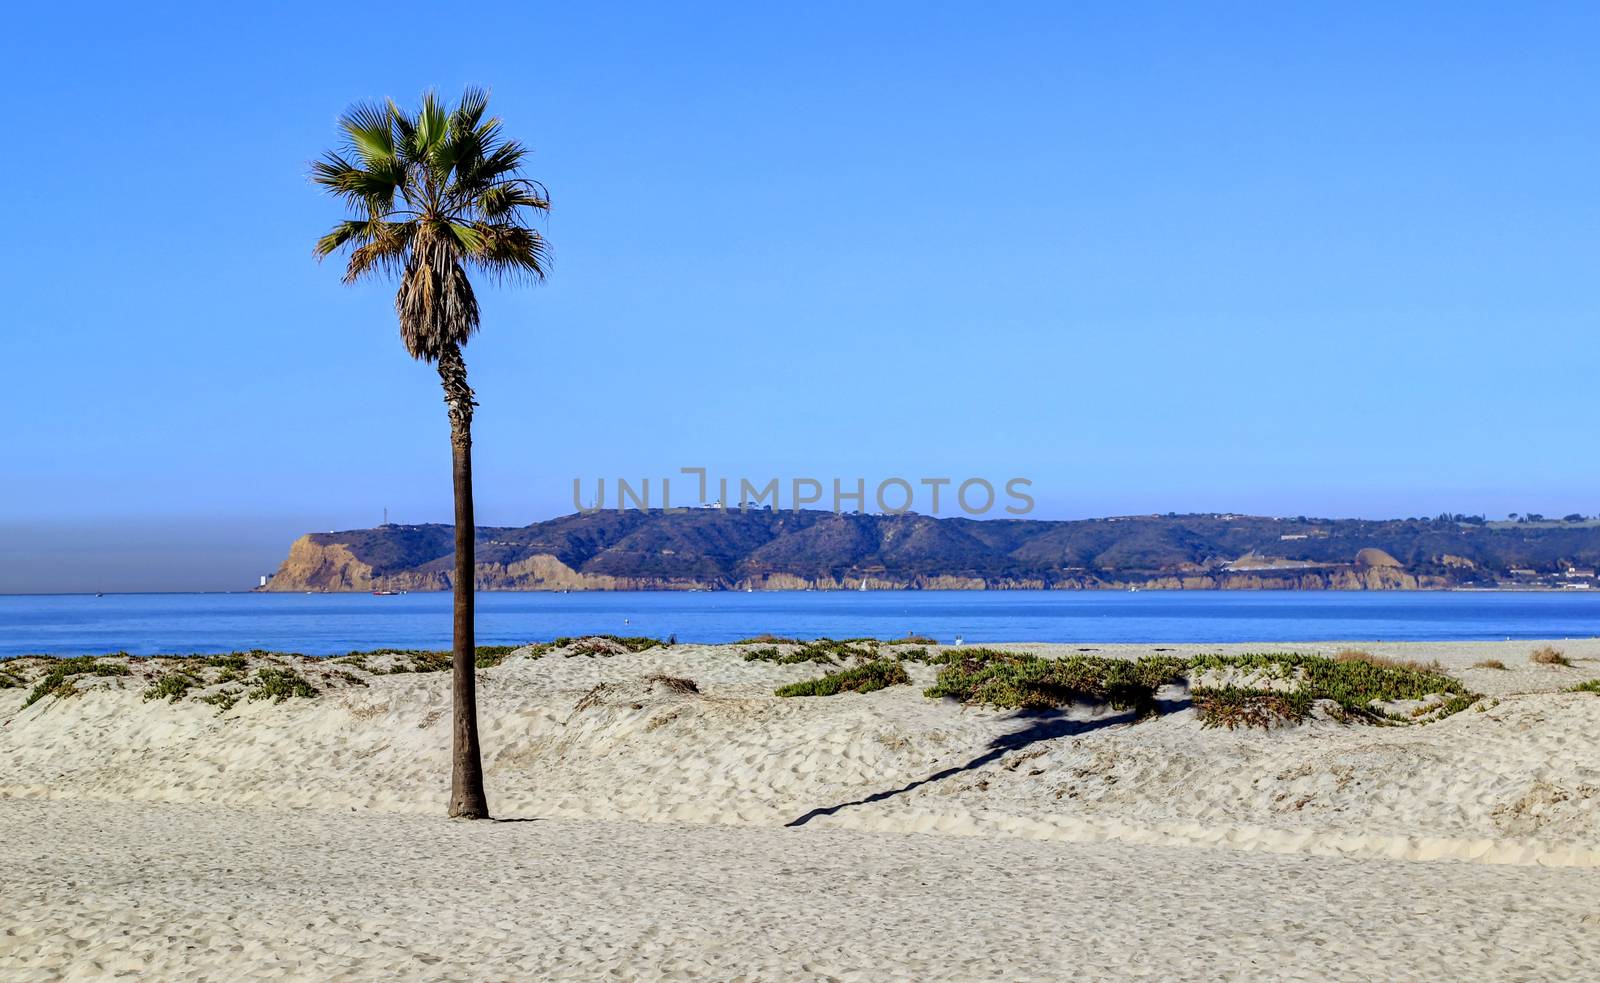 Coronado Beach just outside of San Diego, California by jbyard22